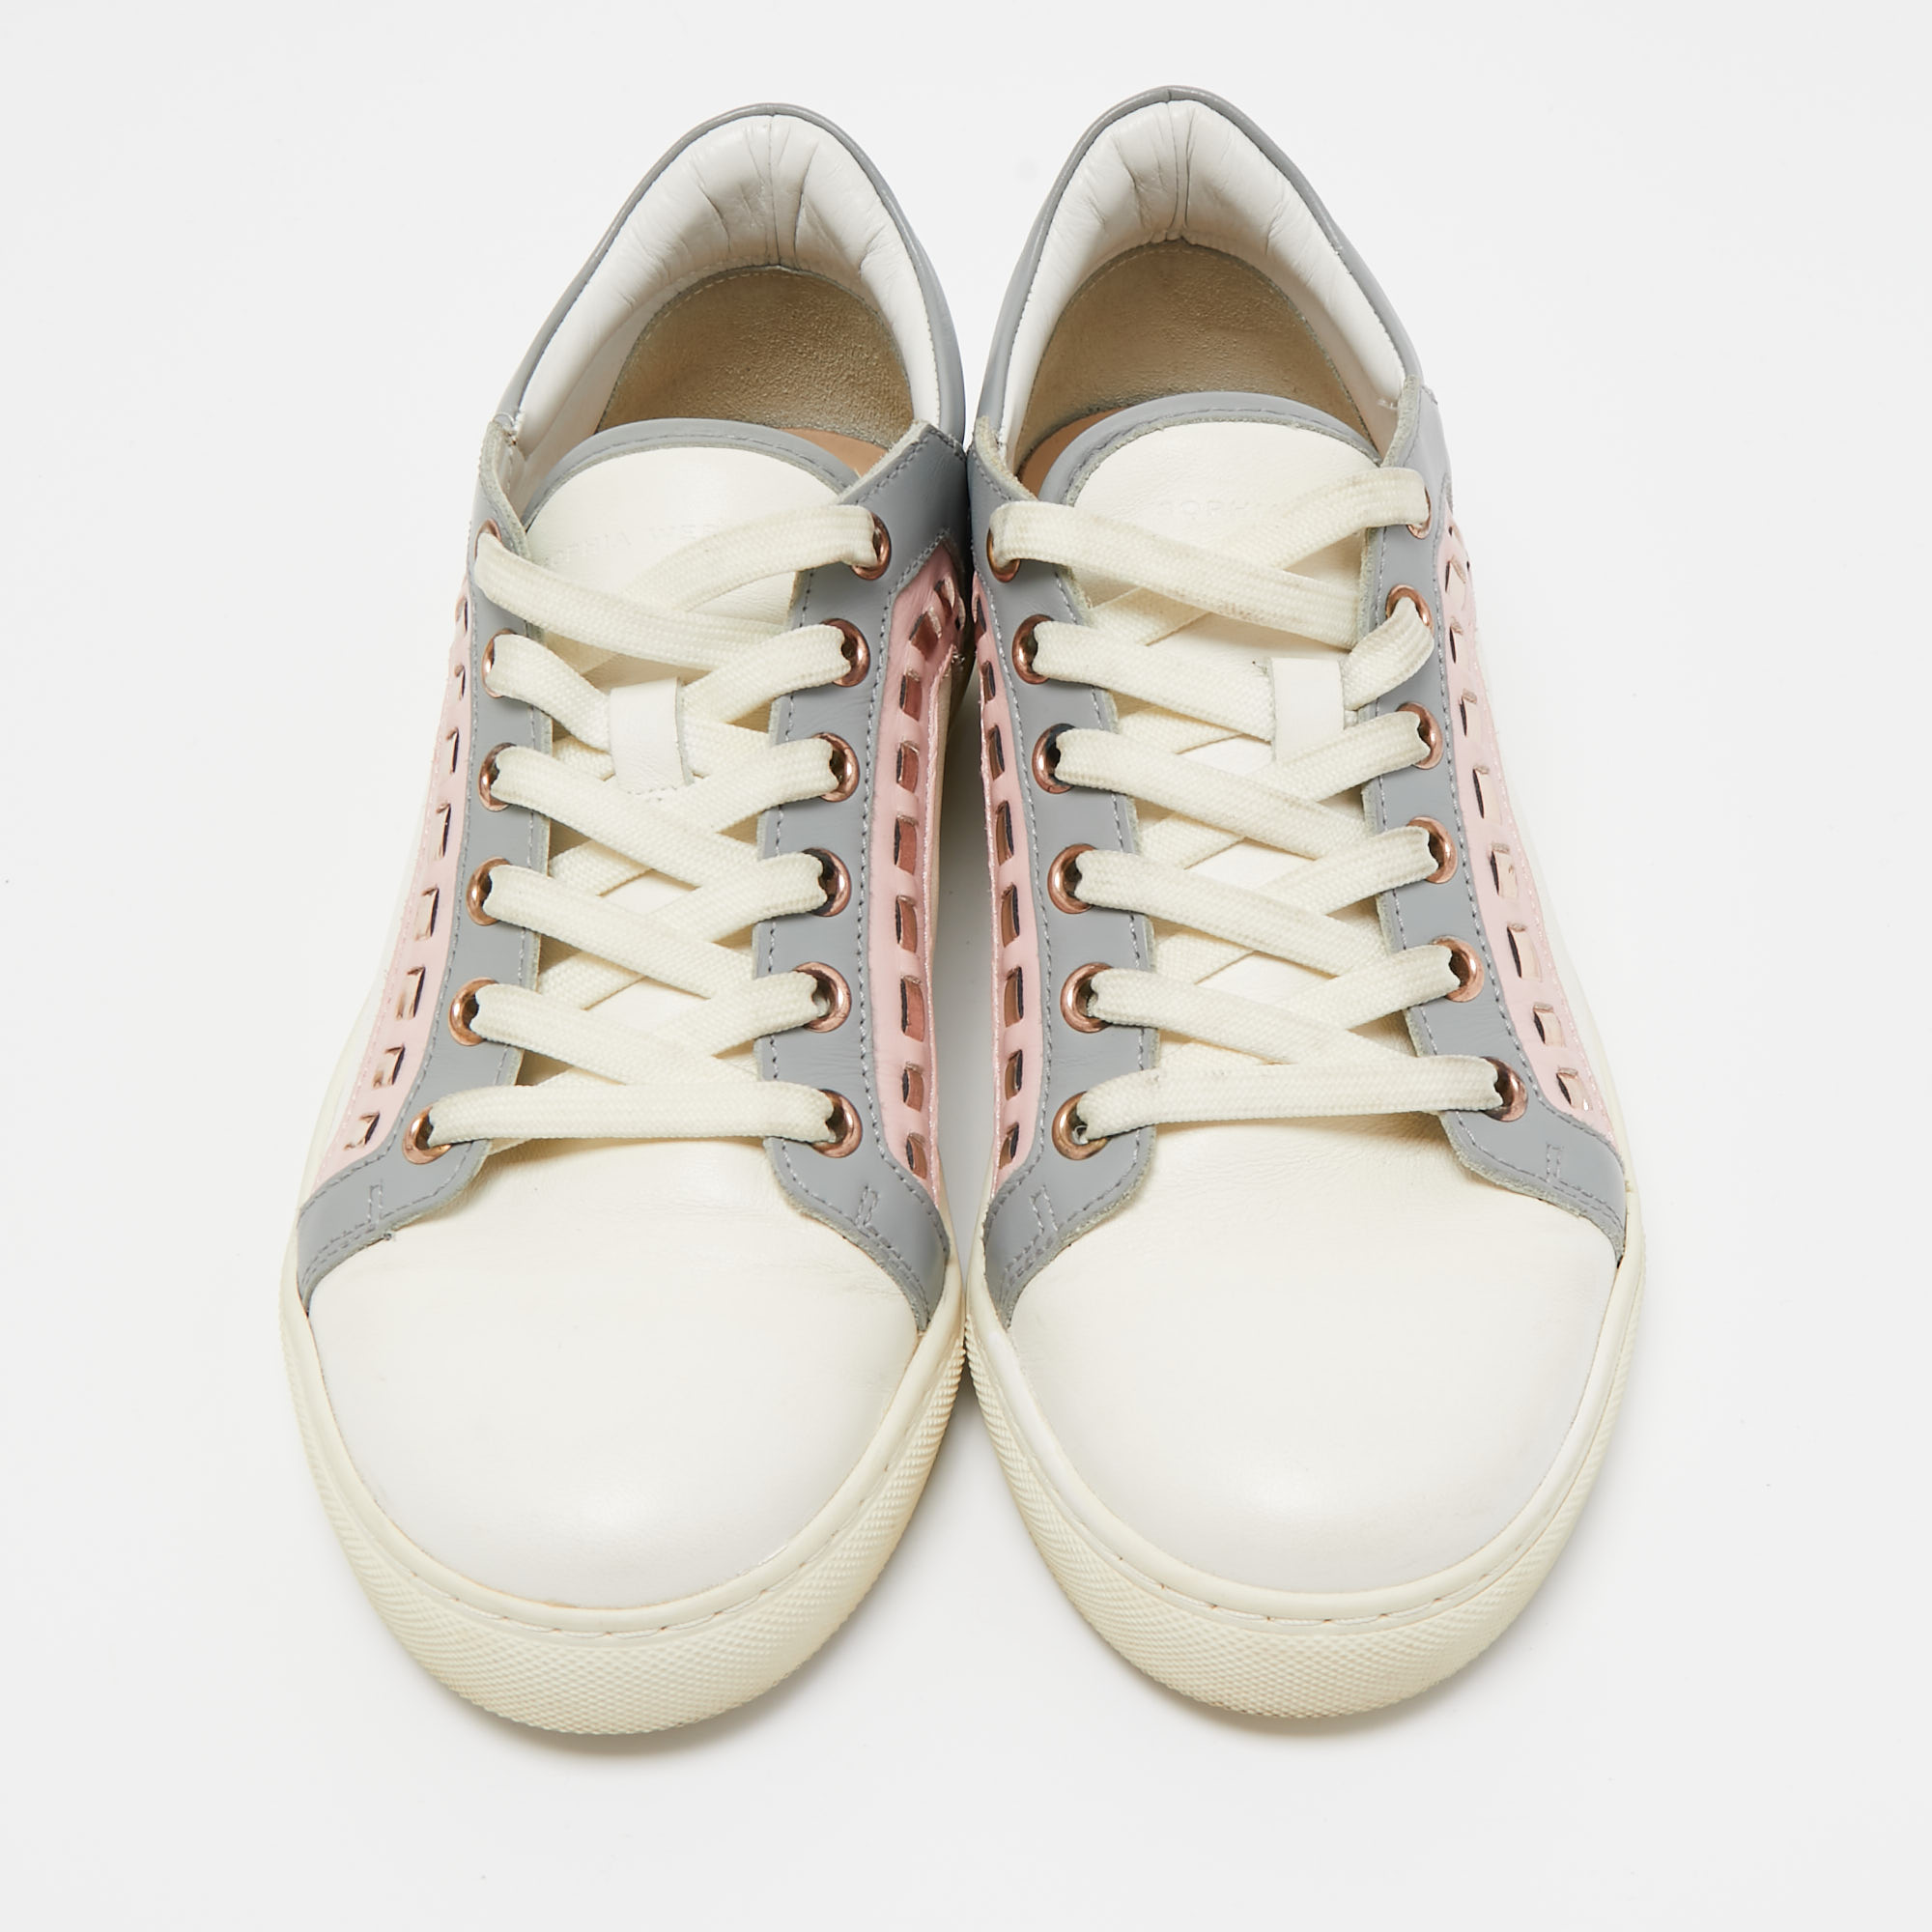 Sophia Webster White Leather Riko Sneakers Size 38